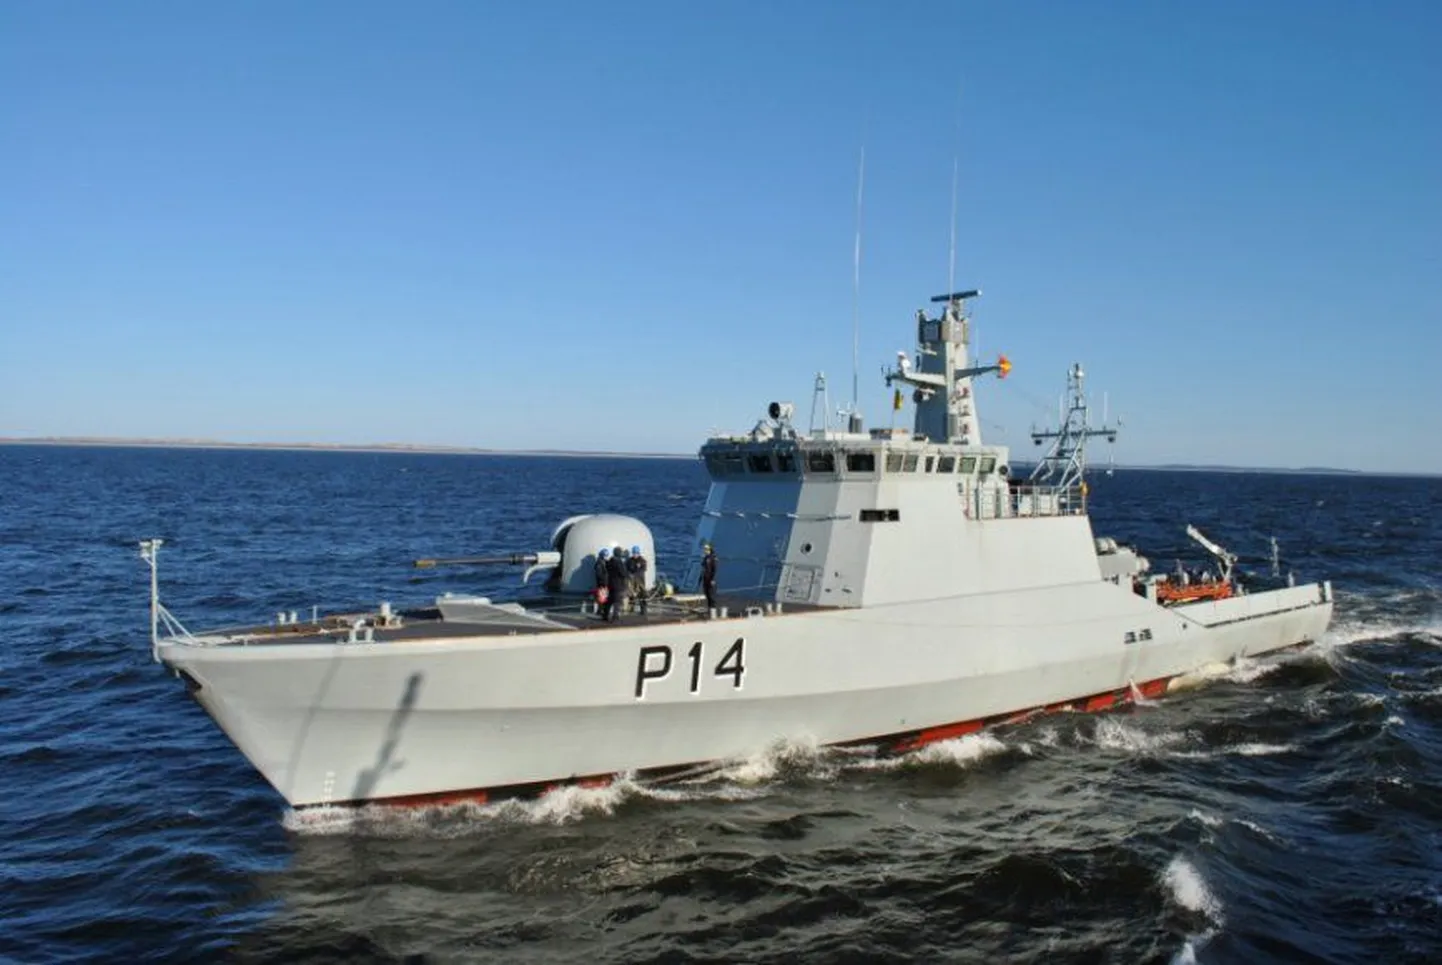 Leedu patrull-laev Aukstaitis.